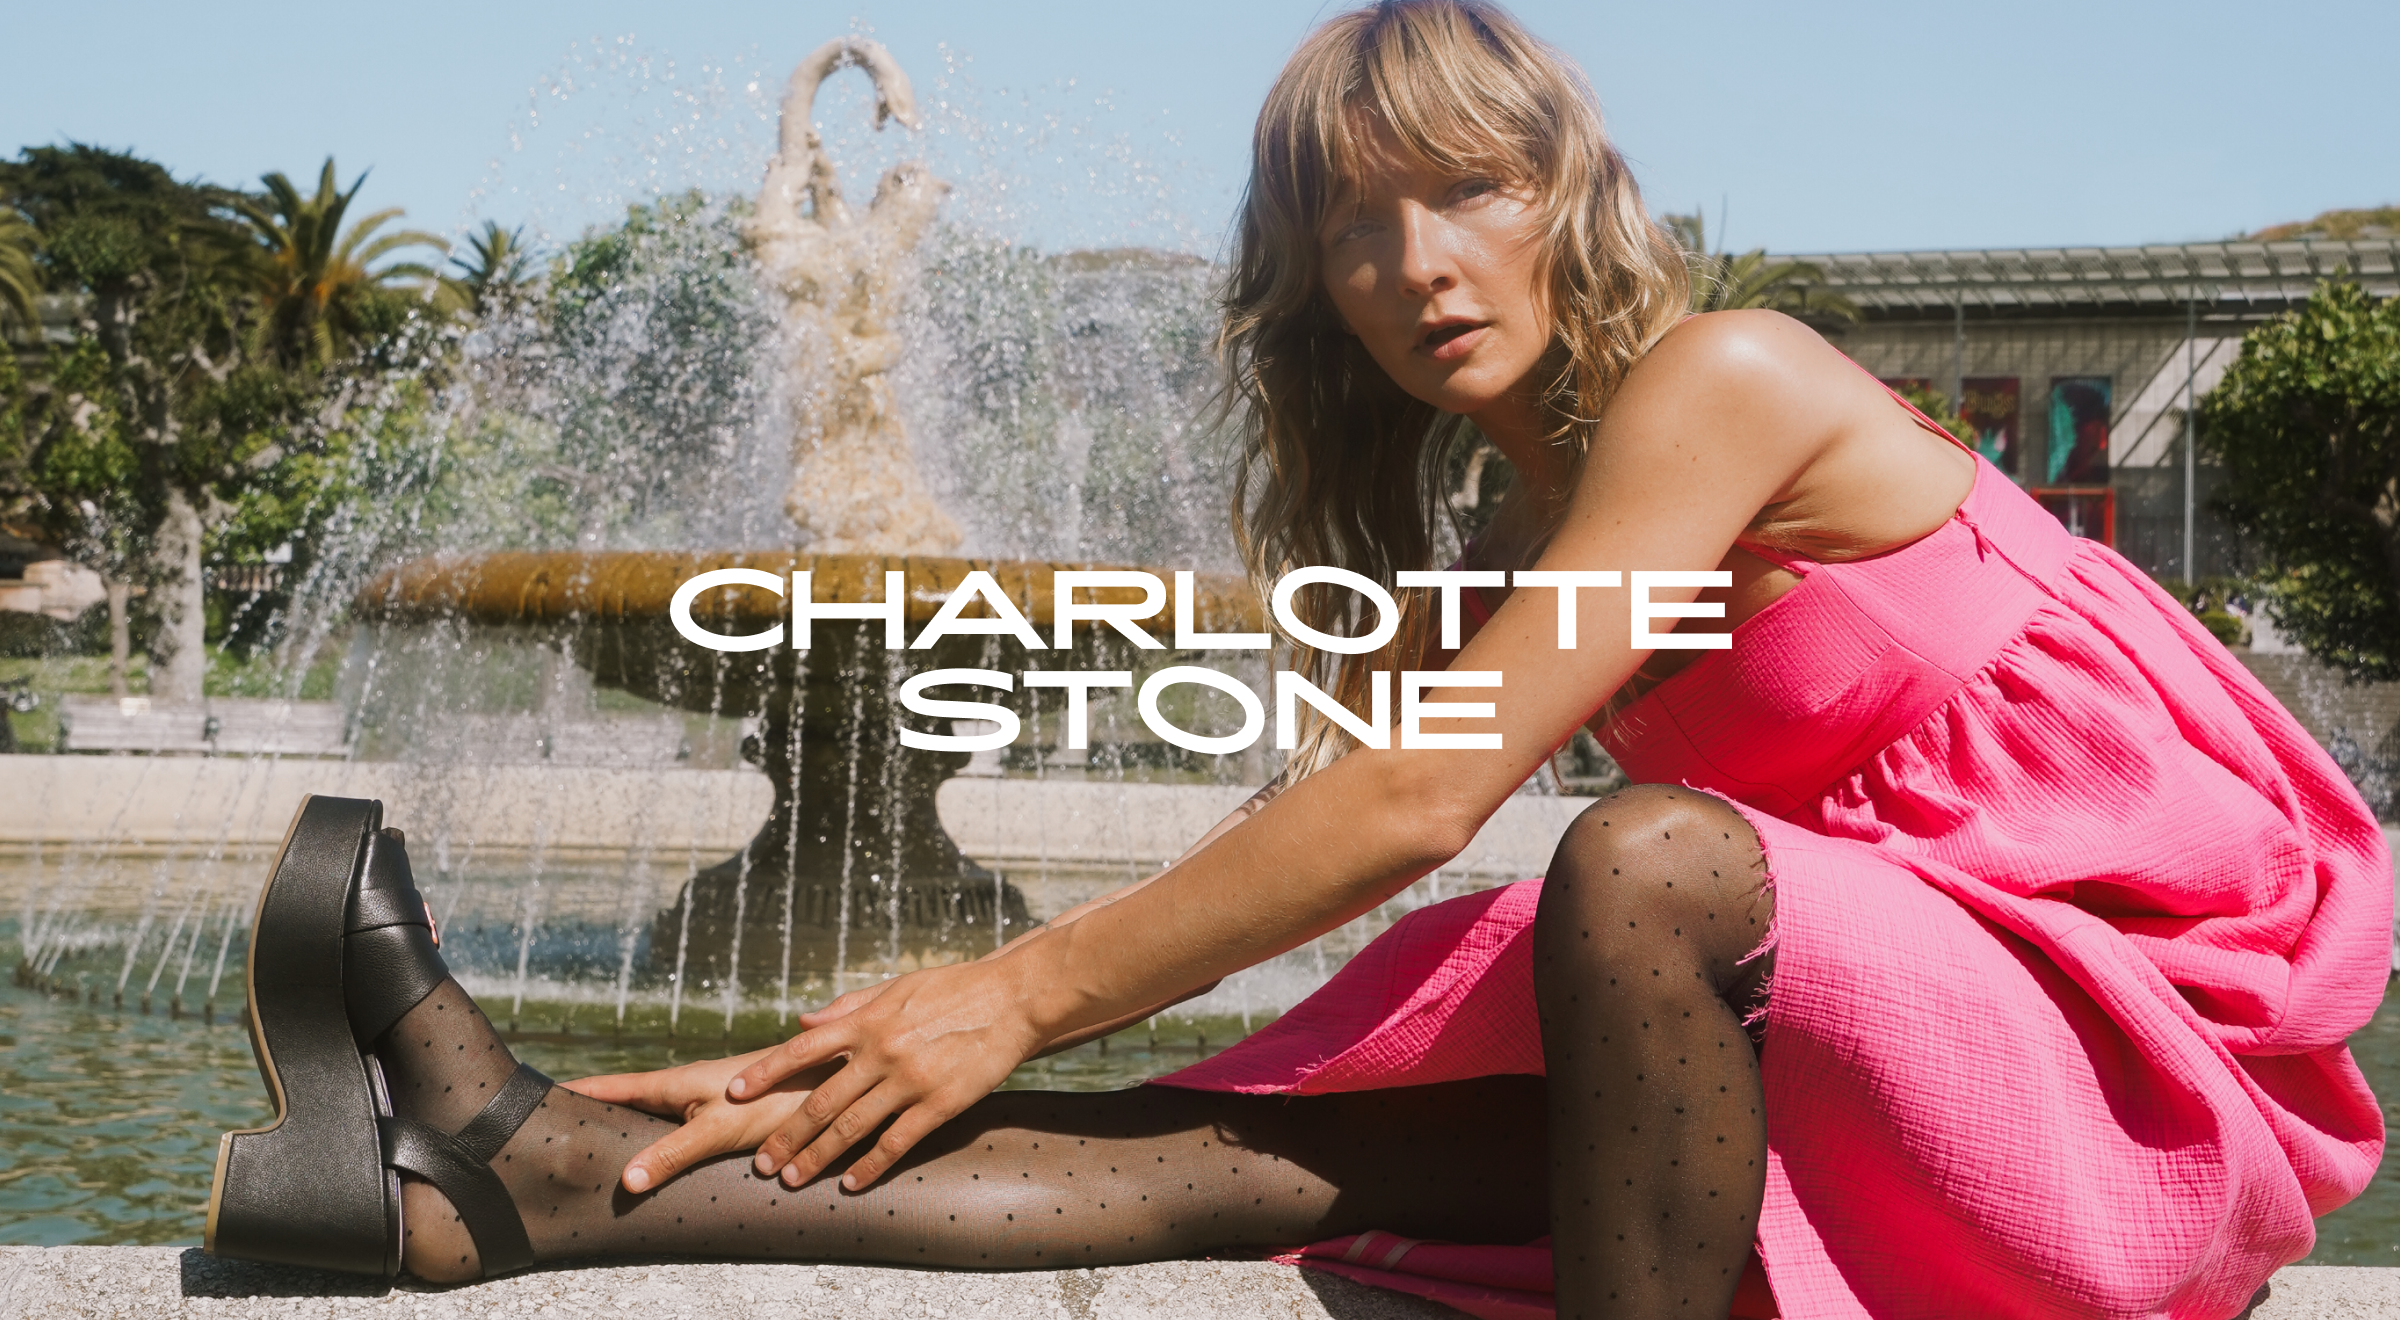 Charlotte Stone